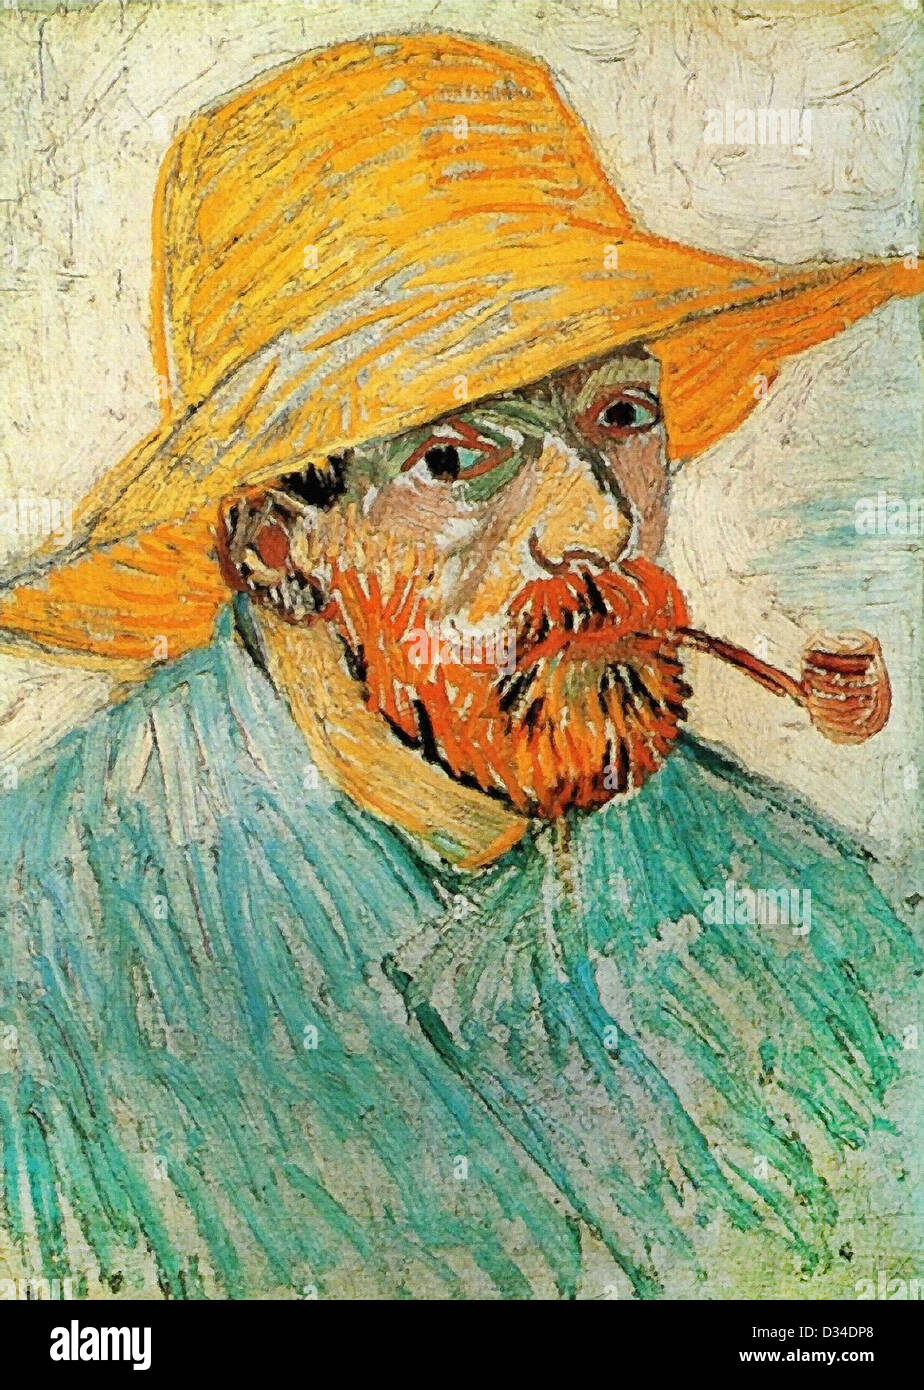 Vincent Van Gogh: Cafe Terrasse, Place du Forum, Arles. 1888 Öl auf Leinwand. Rijksmuseum Kröller-Müller, Otterlo, Niederlande. Stockfoto